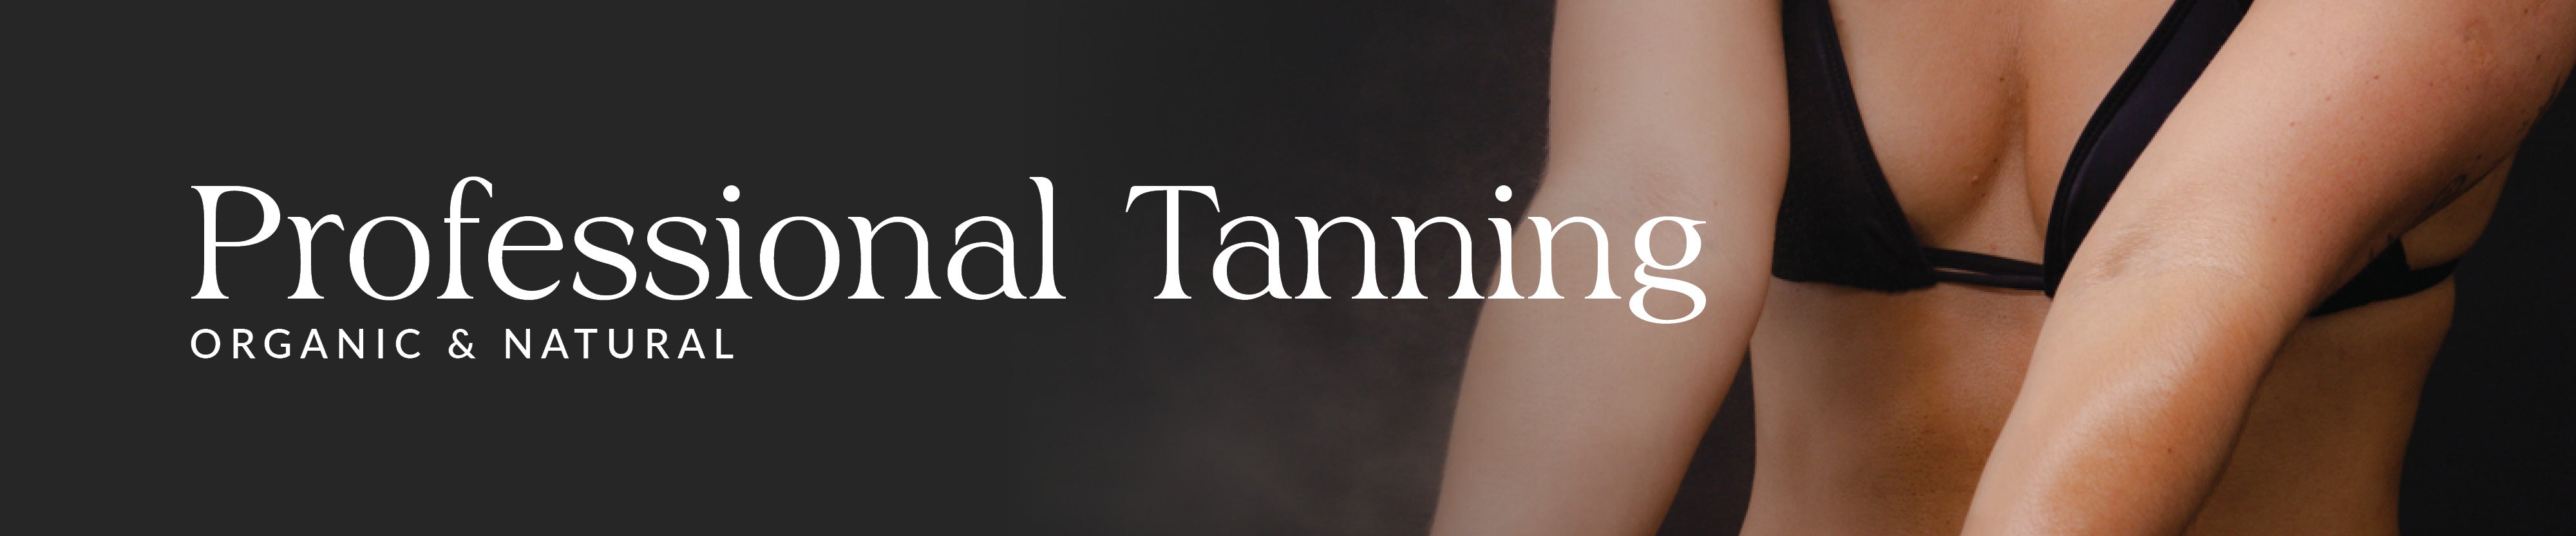 Professional tanning